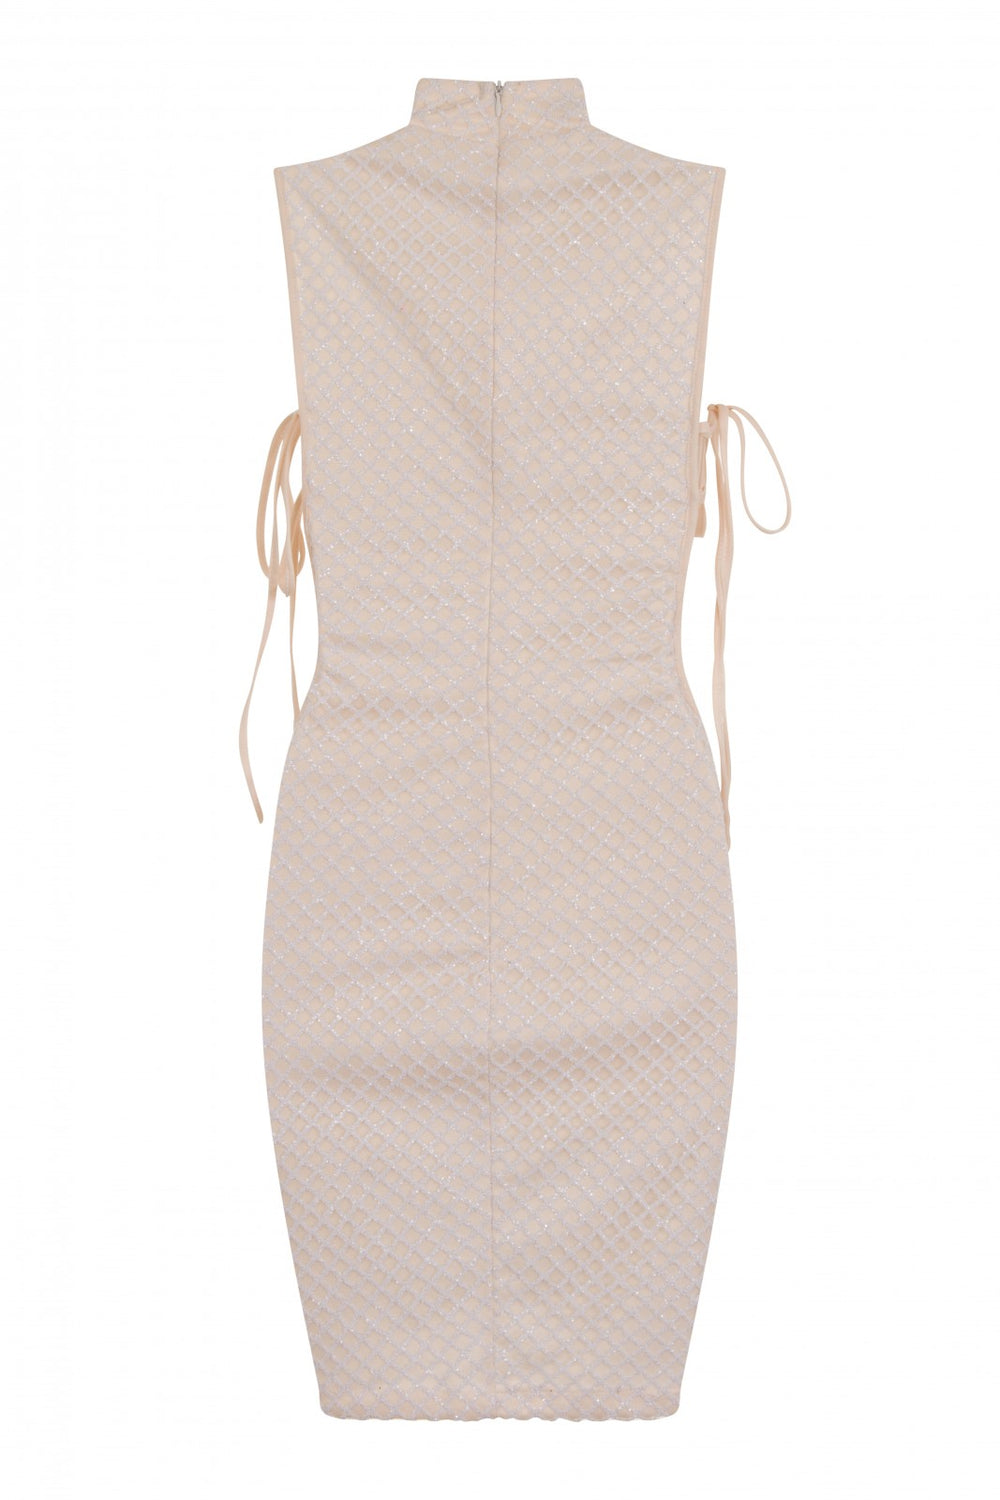 Rena White & Nude High Neck Tie Side Shimmer Sparkle Dress